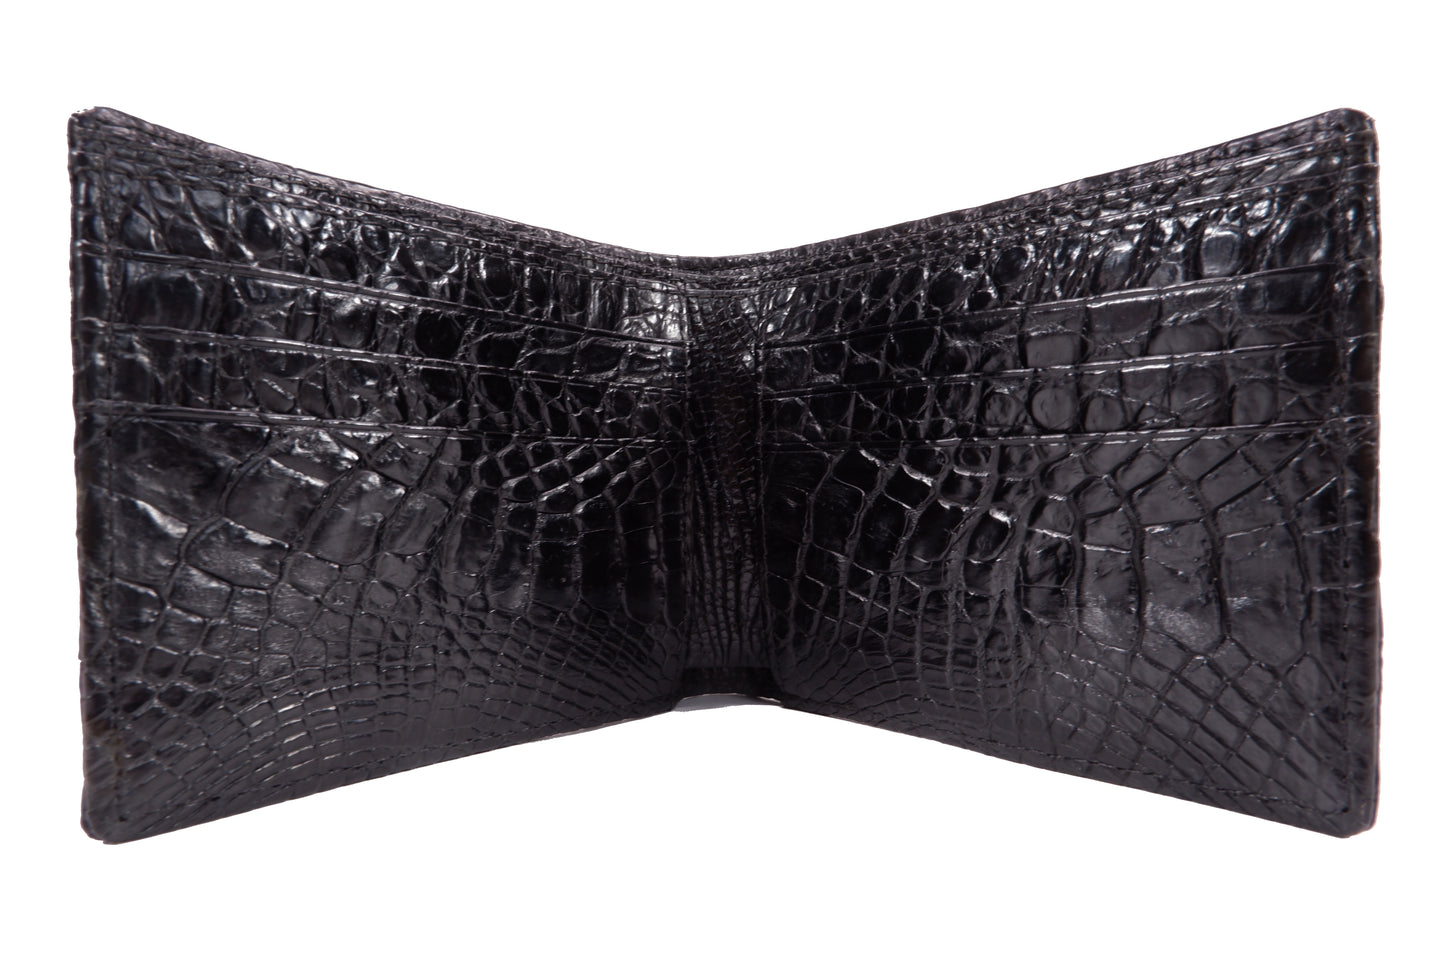 Genuine Crocodile Hornback Skin Leather Bifold Wallet with Crocodile Skin Interior